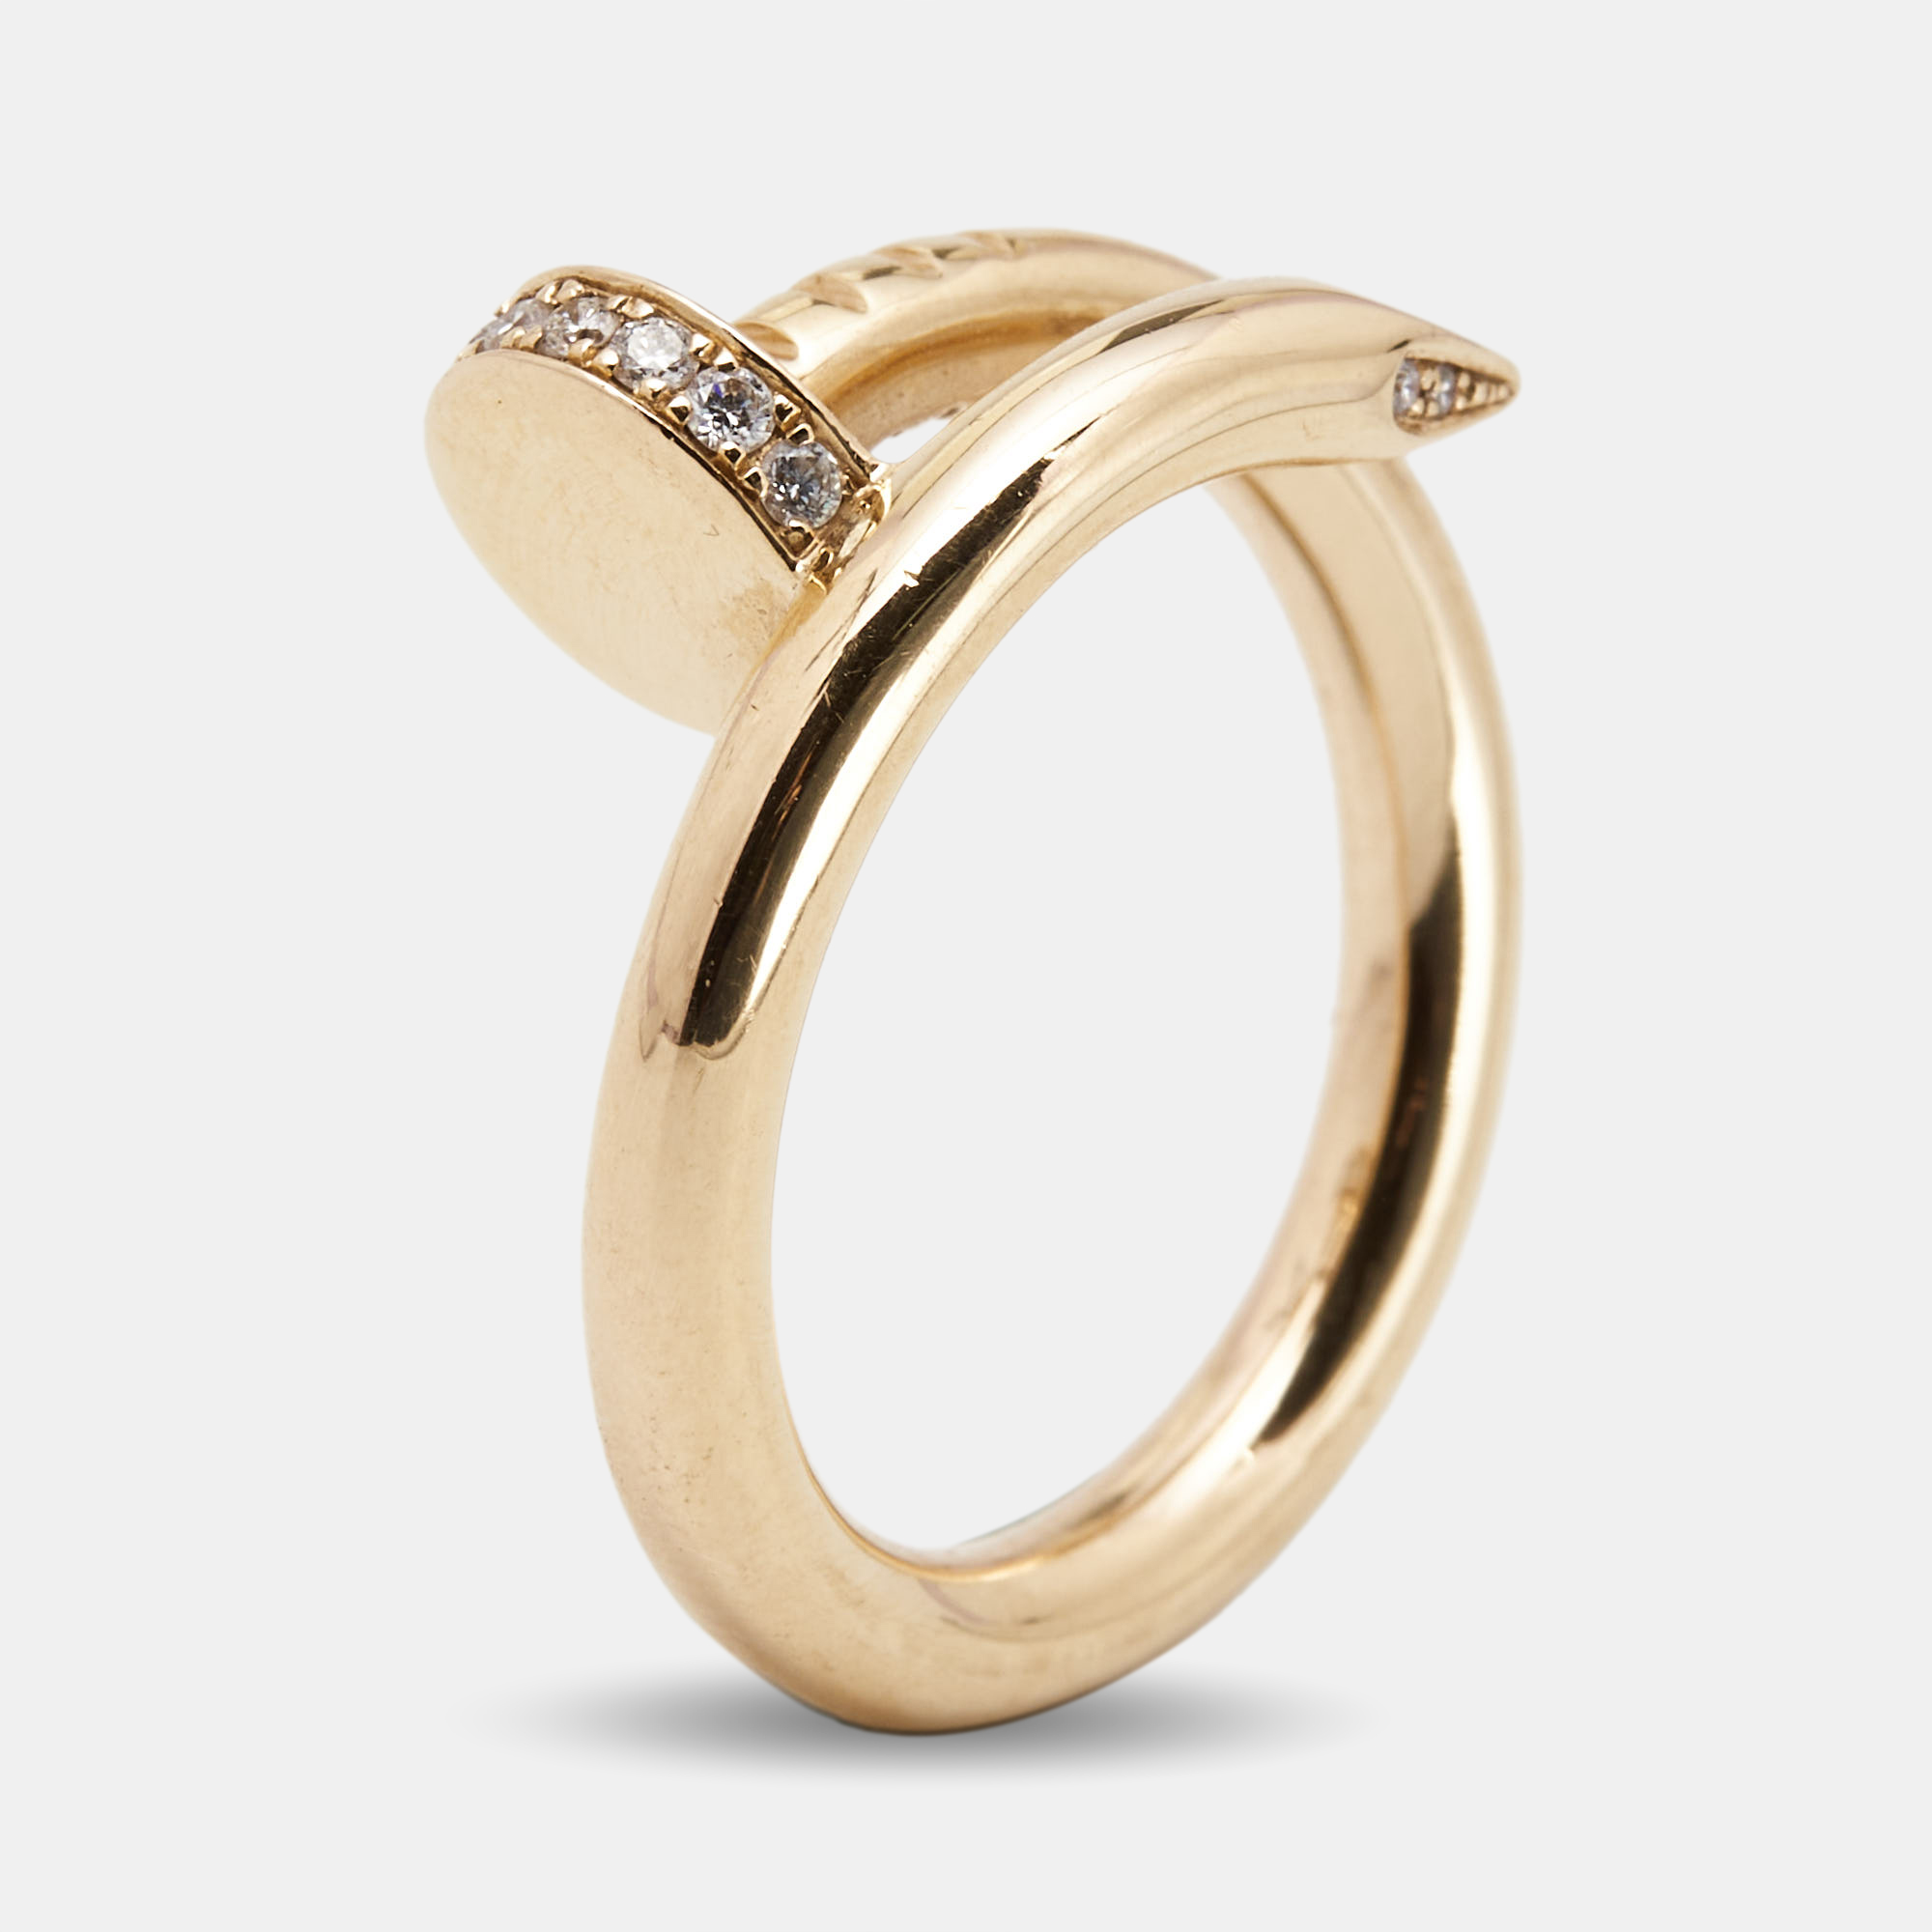 Cartier Juste Un Clou Diamonds 18k Rose Gold Ring Size 50